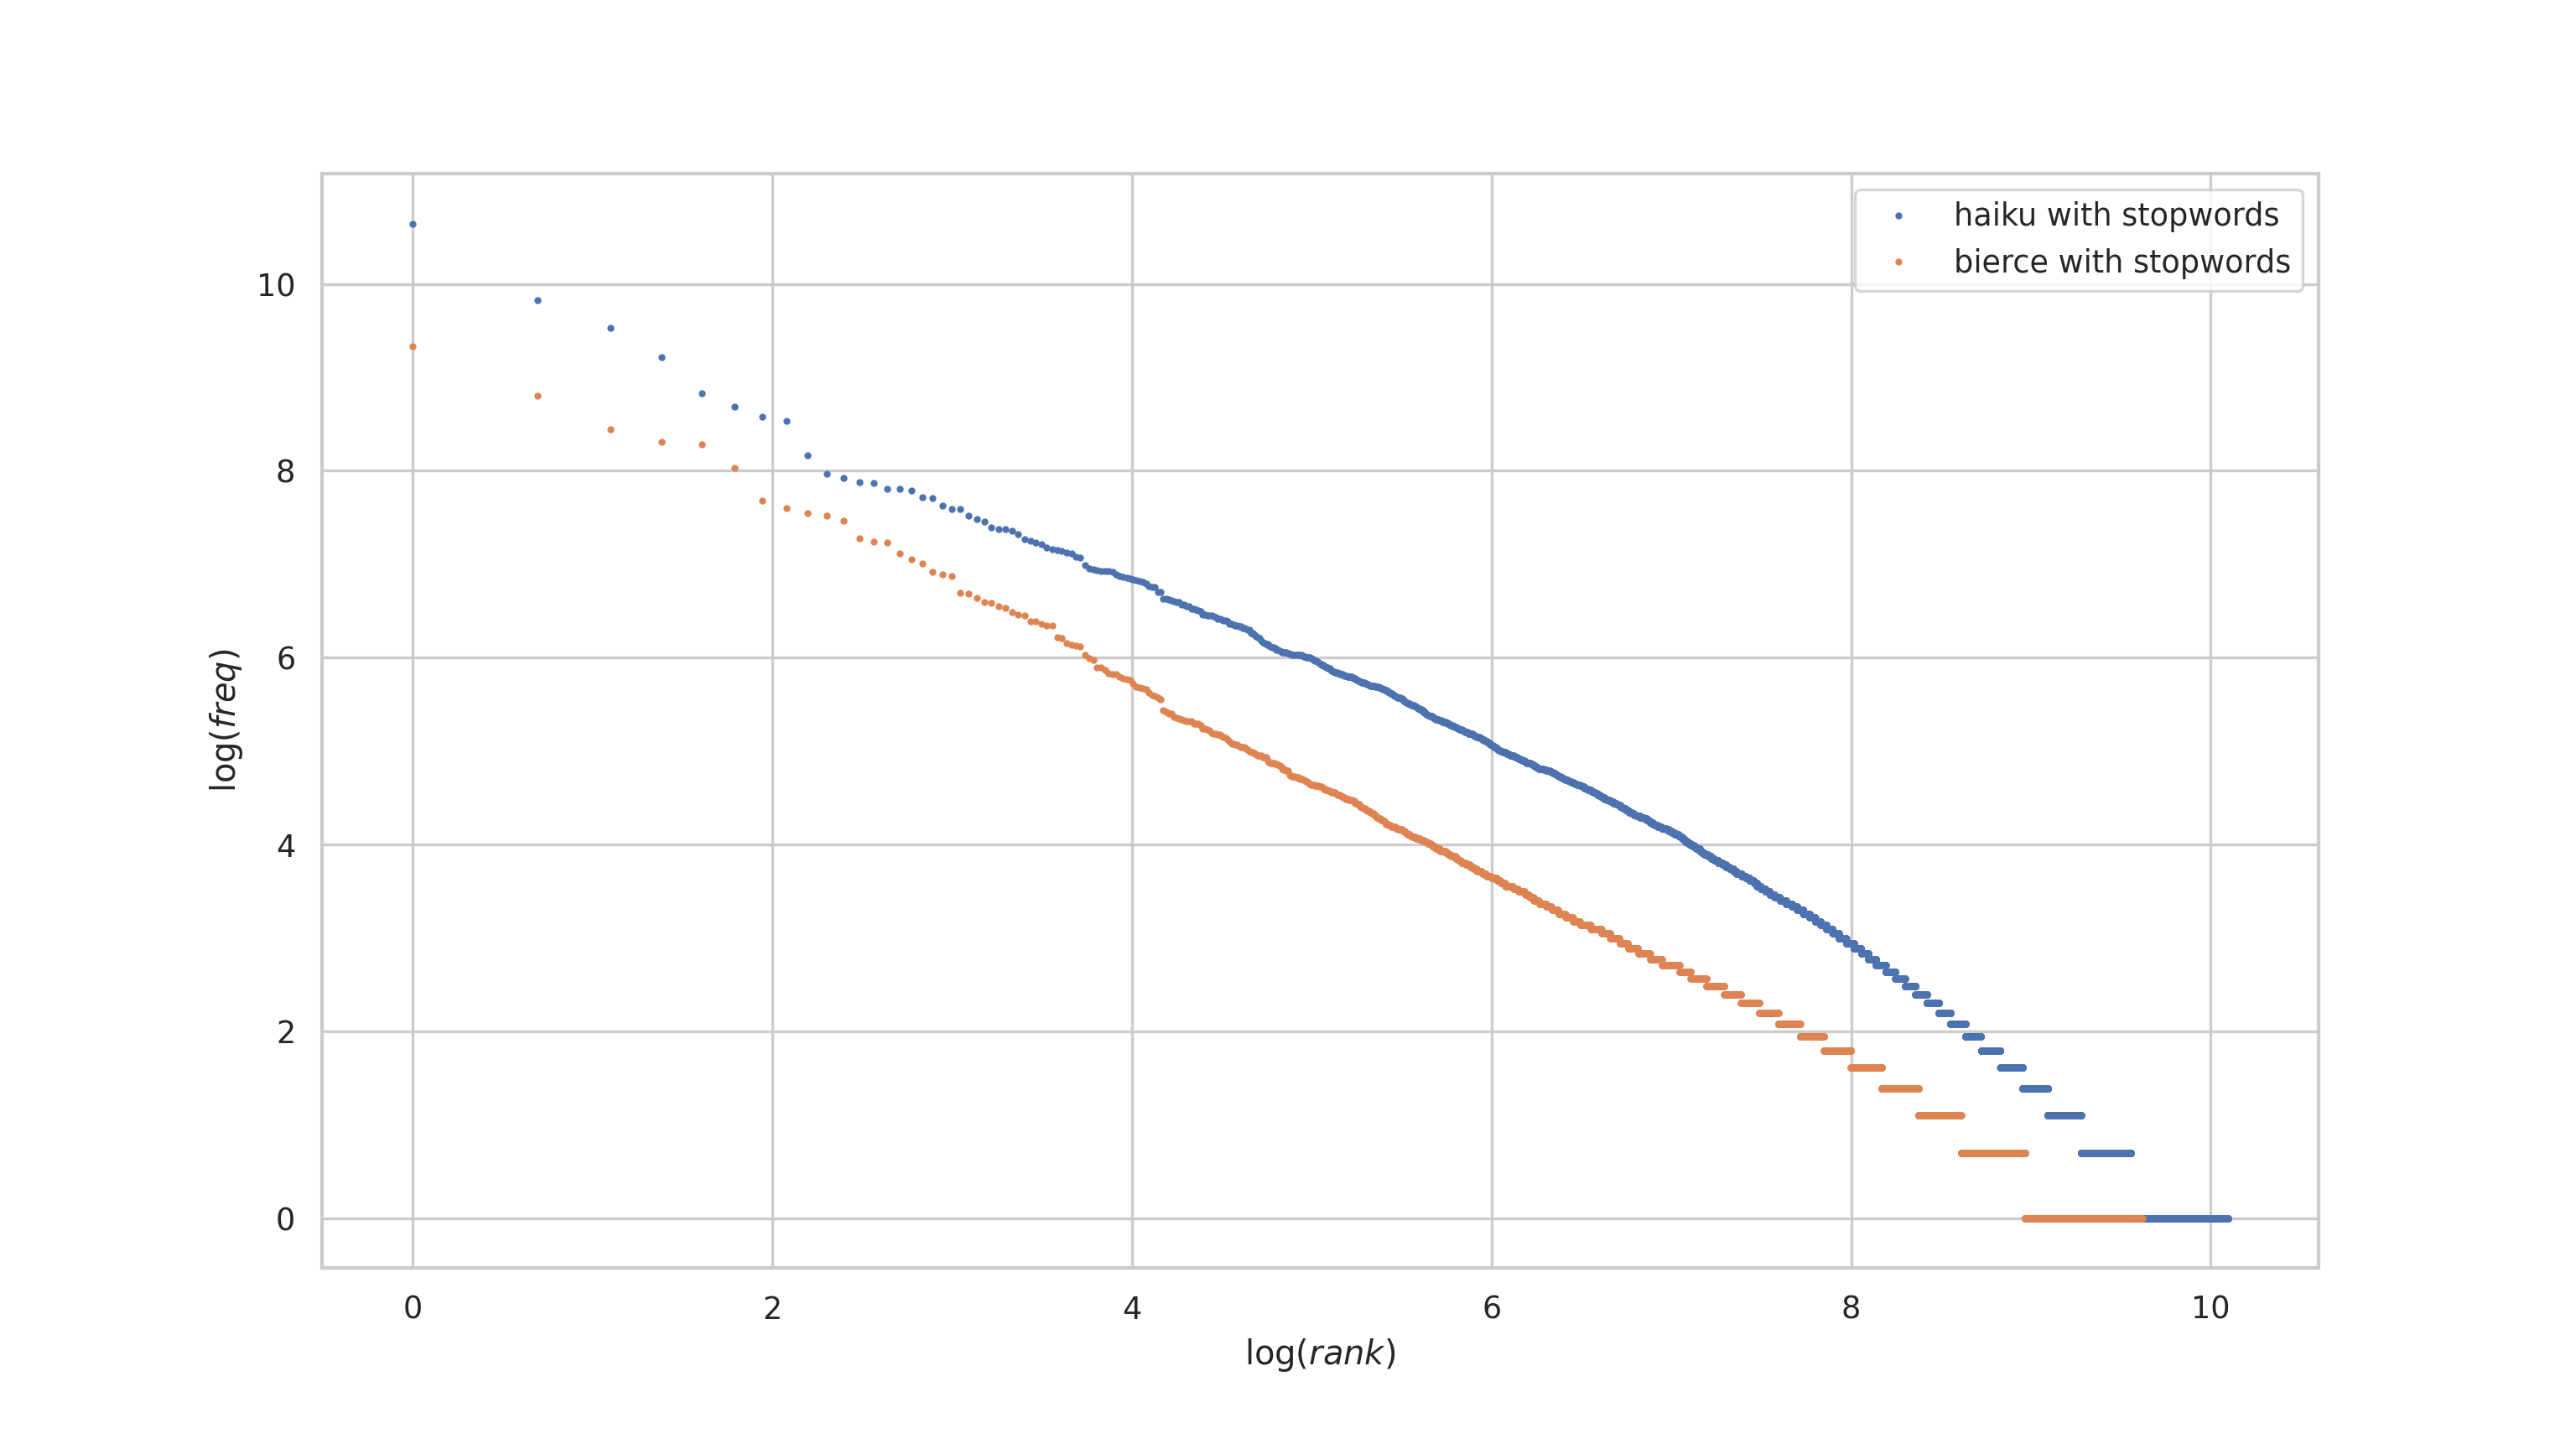 A log-log plot of rank vs frequency for Bierce's works and the haiku corpus